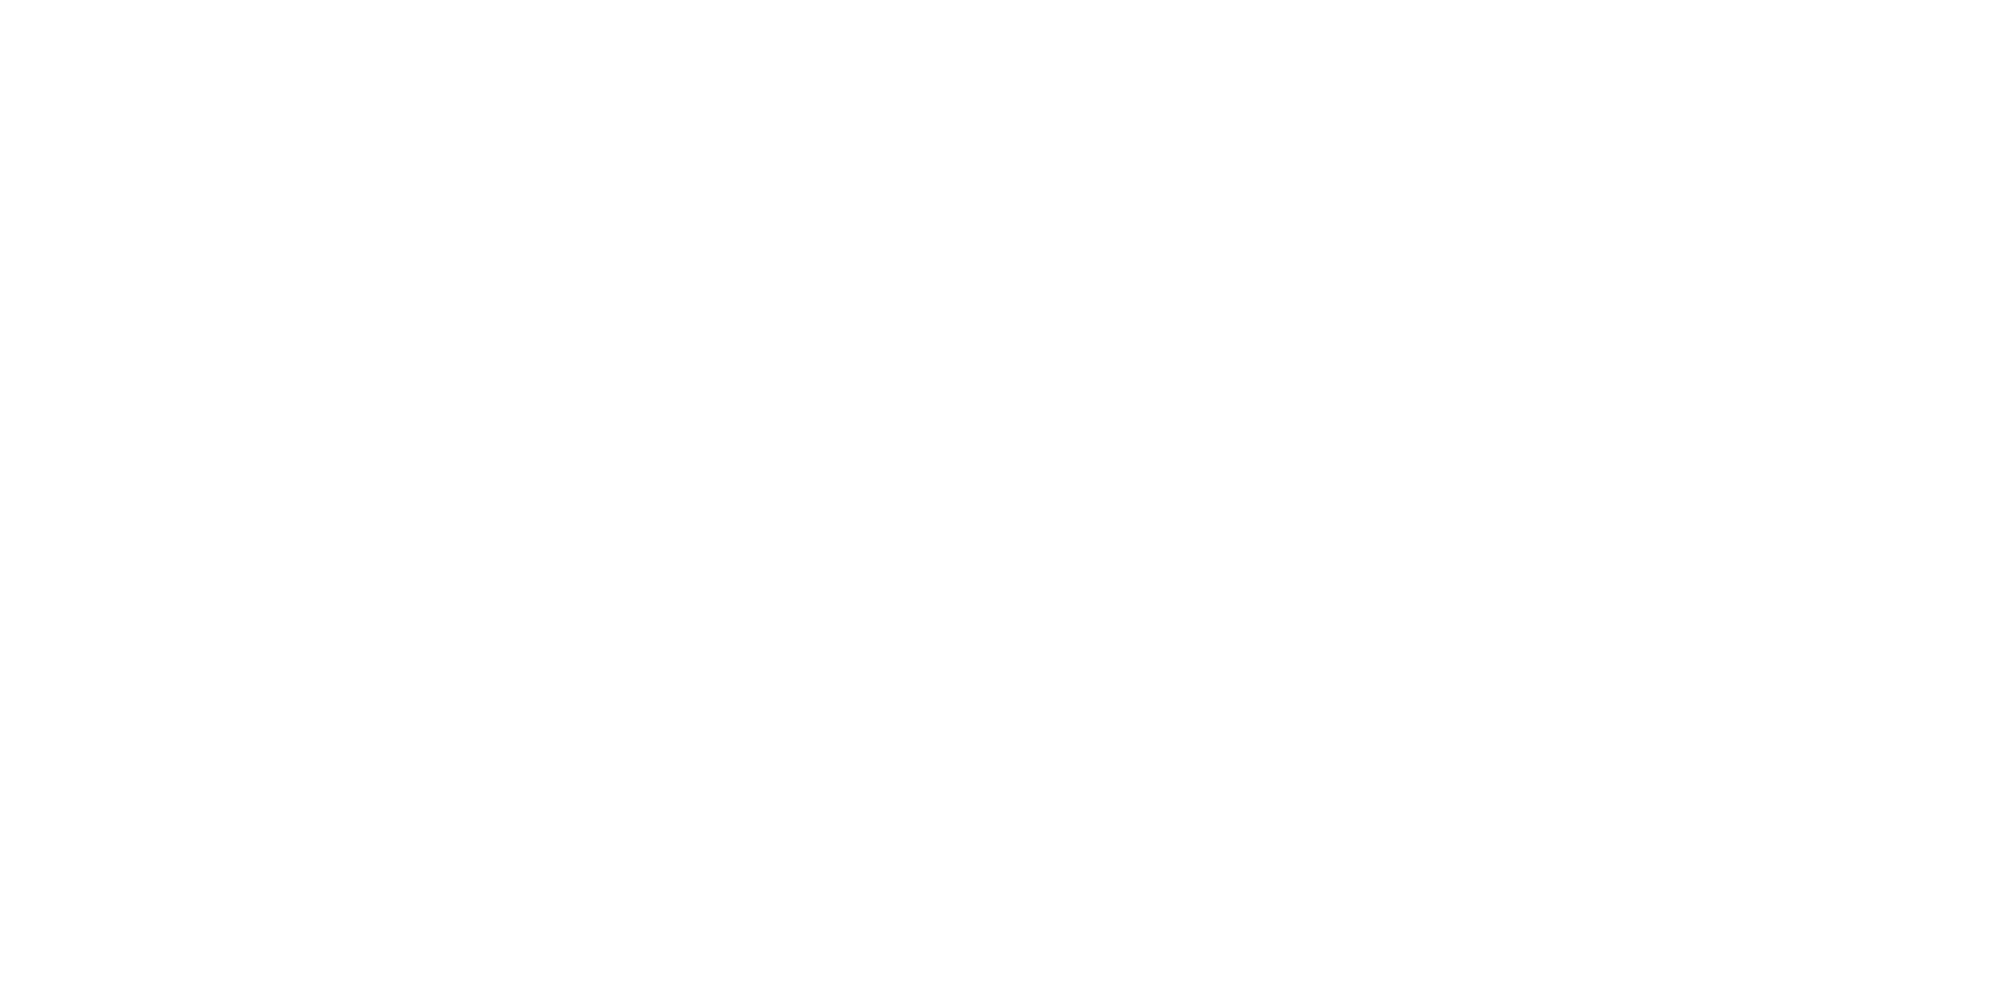 Lethbridge Herald